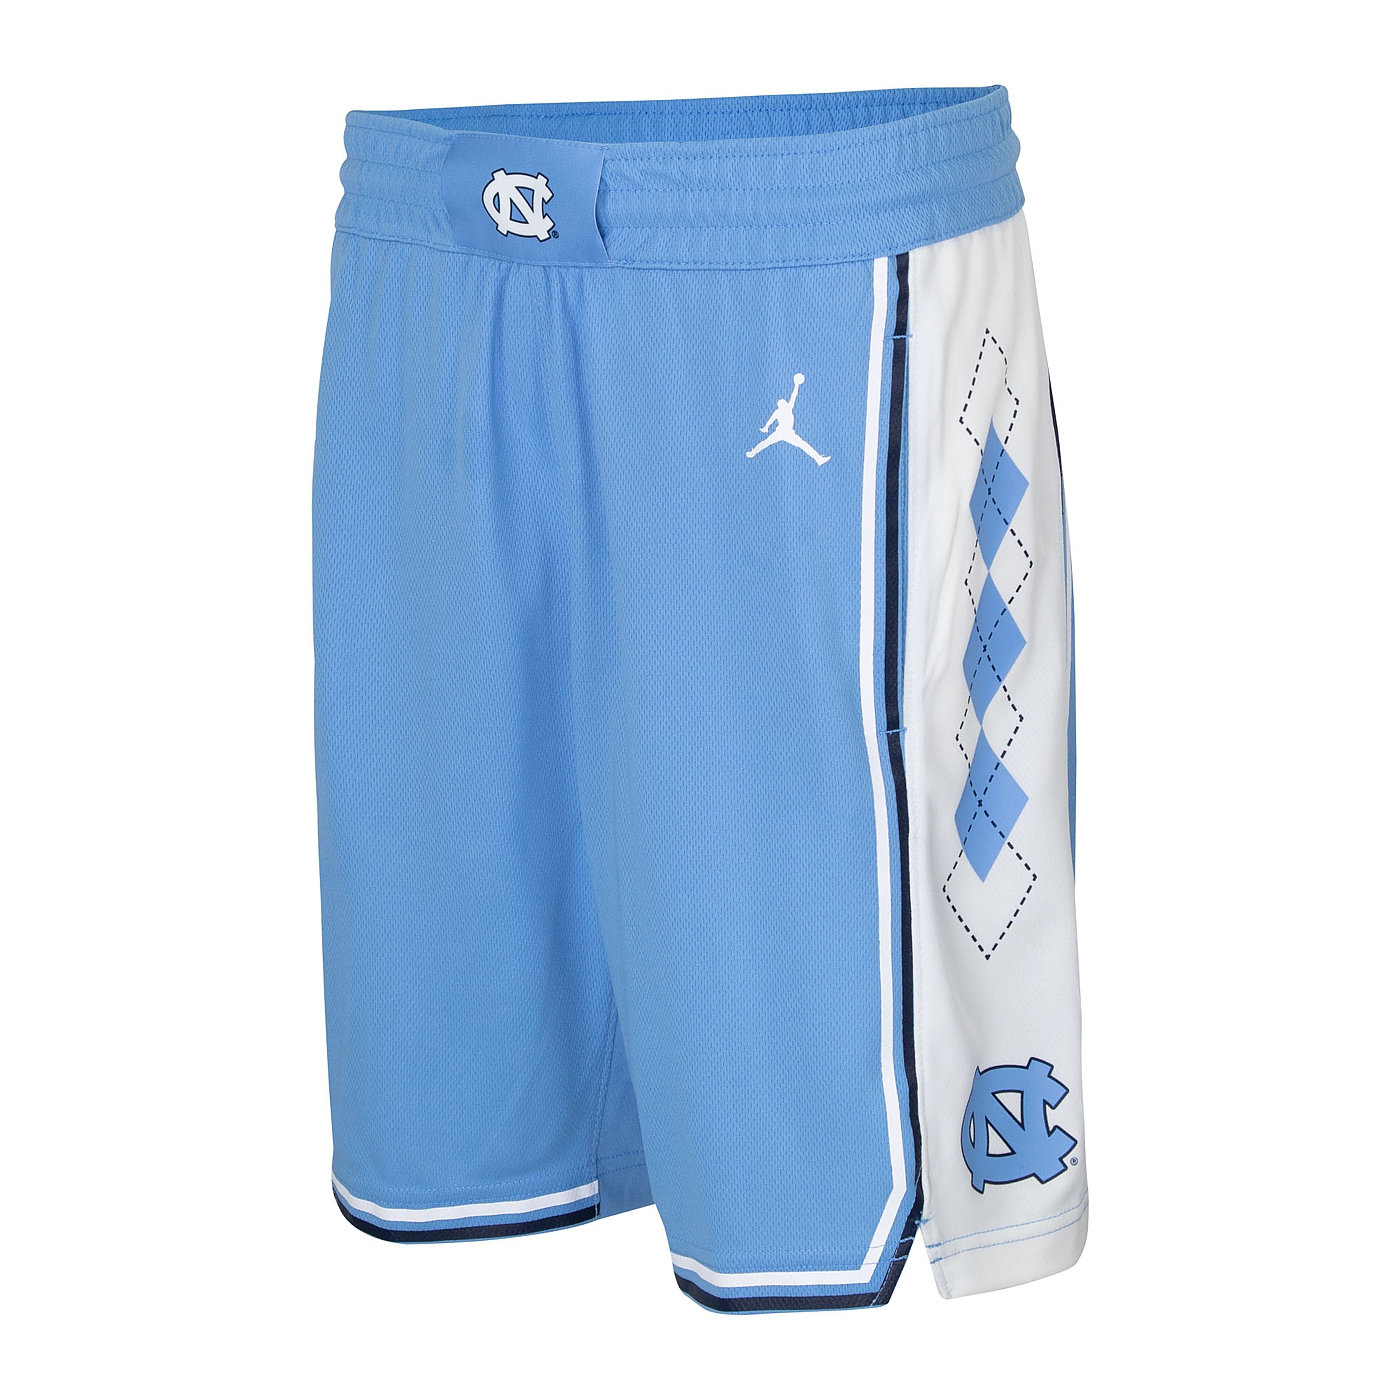 unc basketball shorts authentic